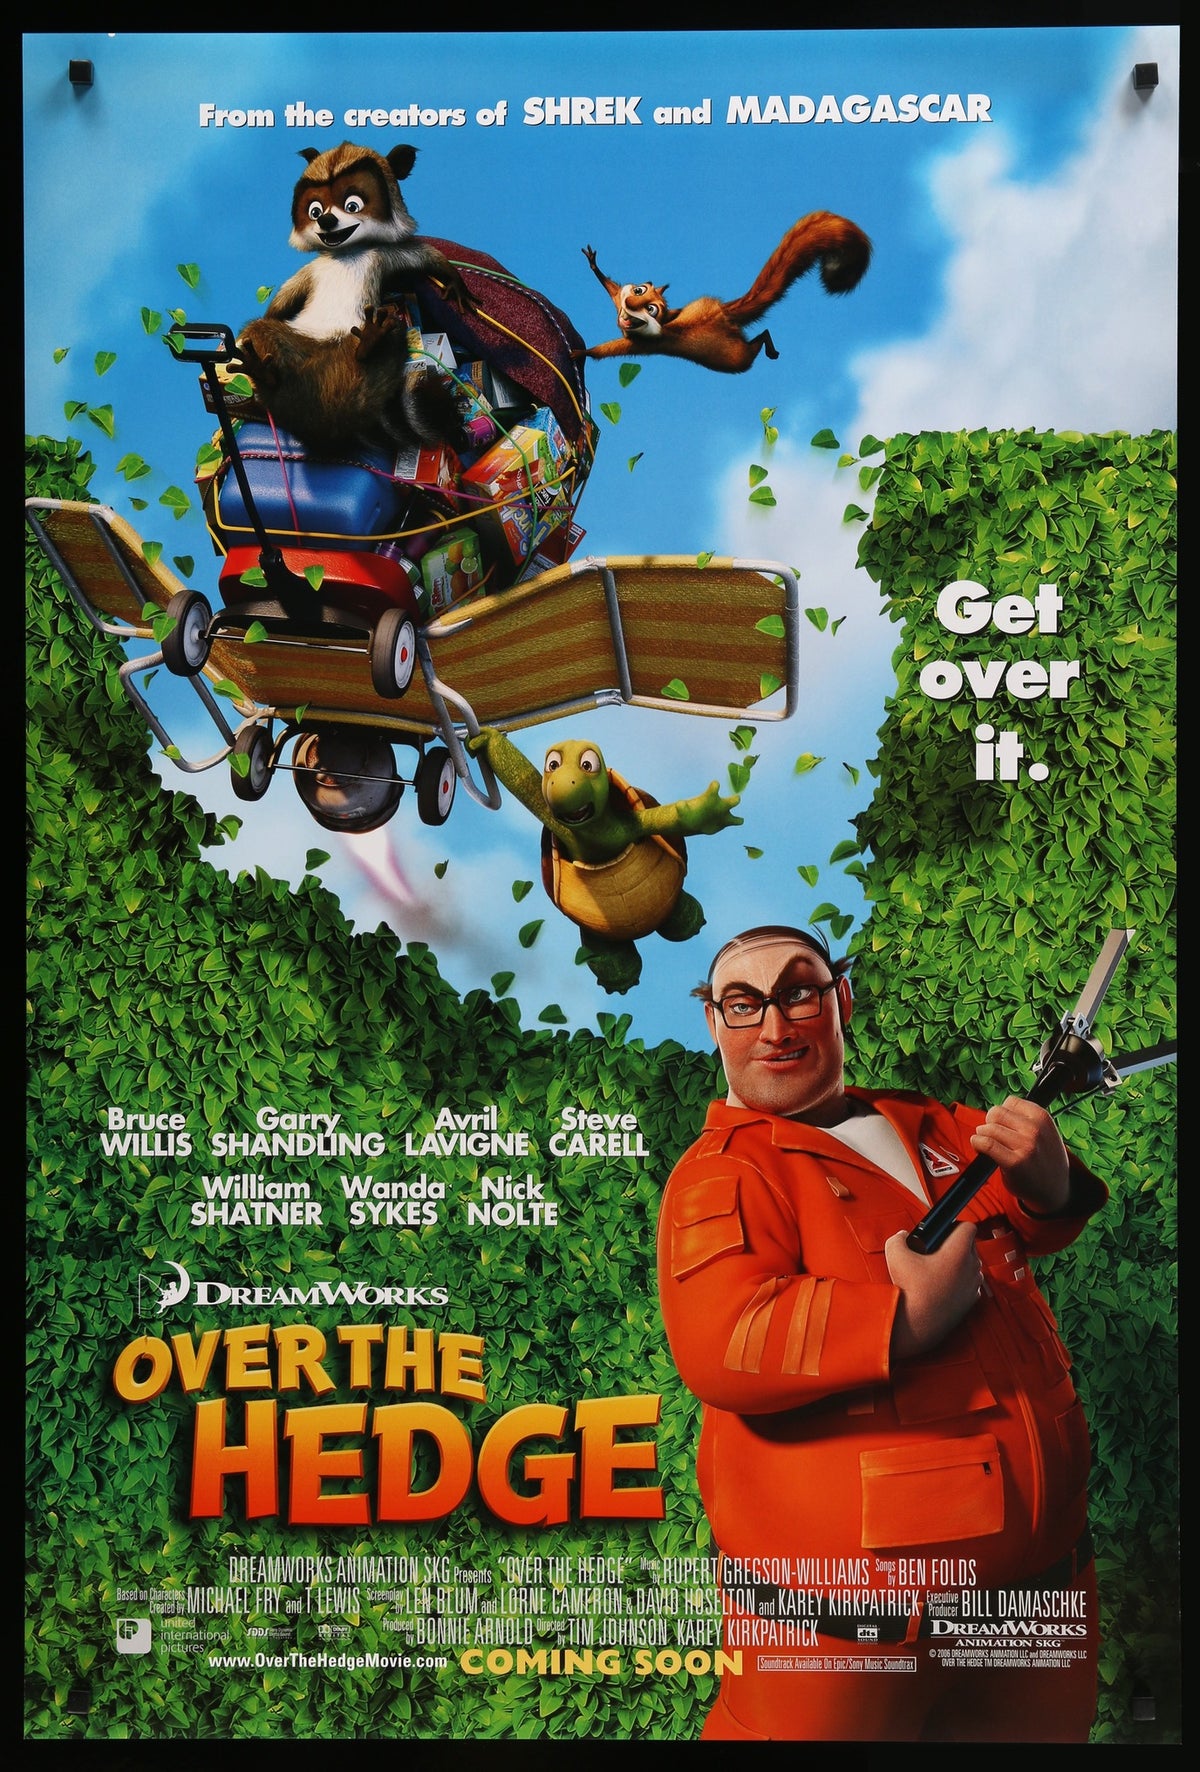 Over the Hedge (2006) original movie poster for sale at Original Film Art